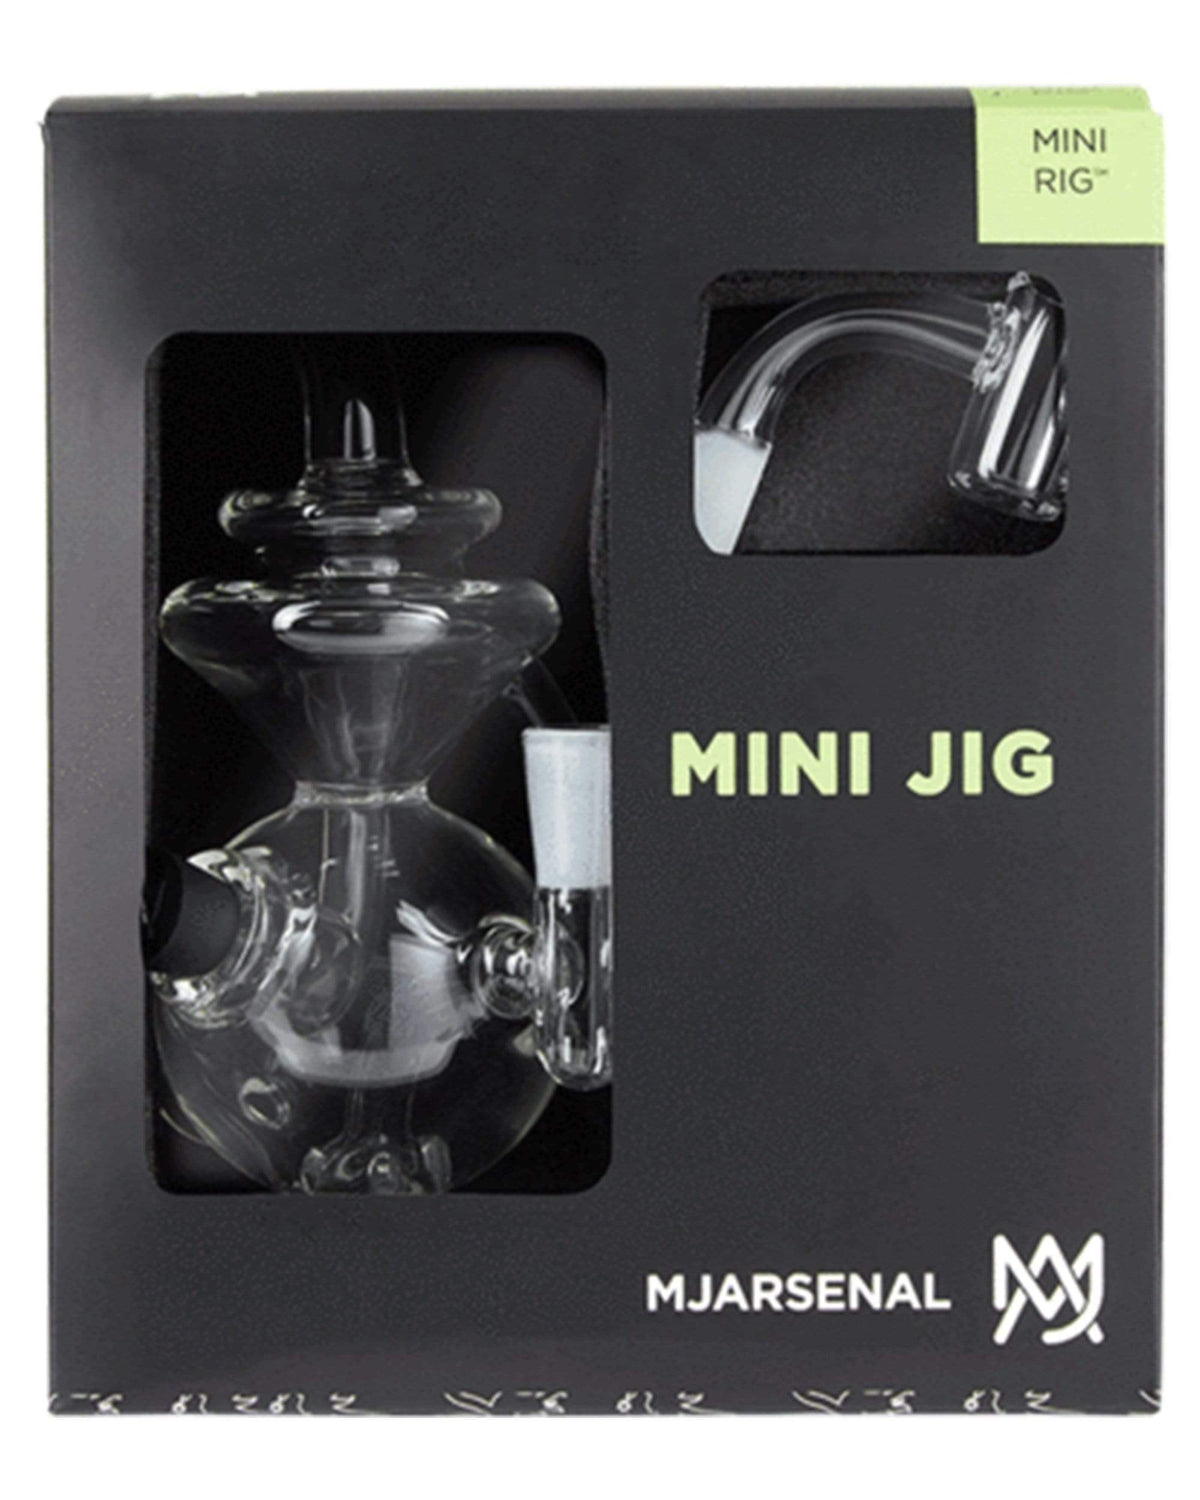 Mini Jig Mini Rig - MJ Arsenal MJ arsenal